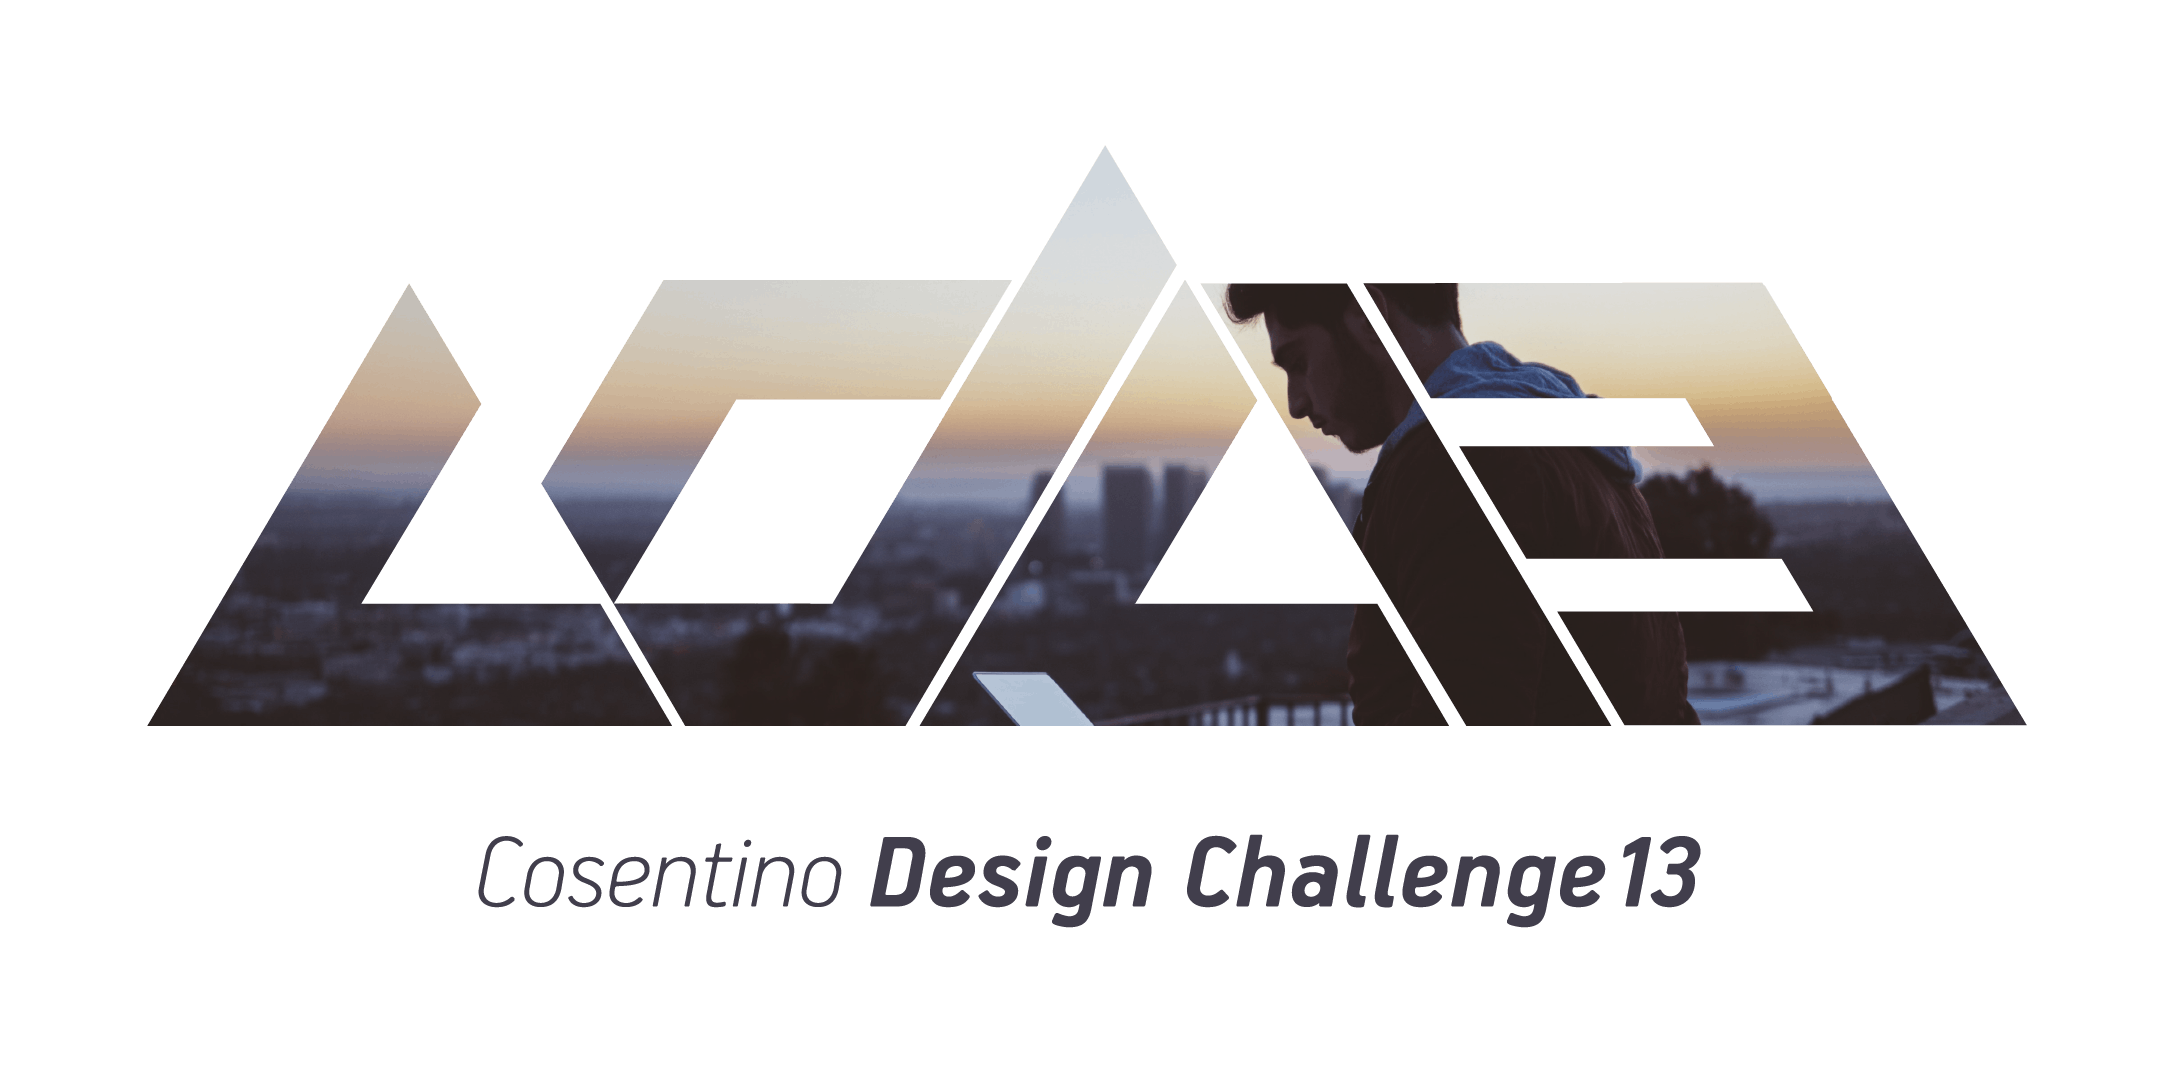 Cosentino Design Challenge #13